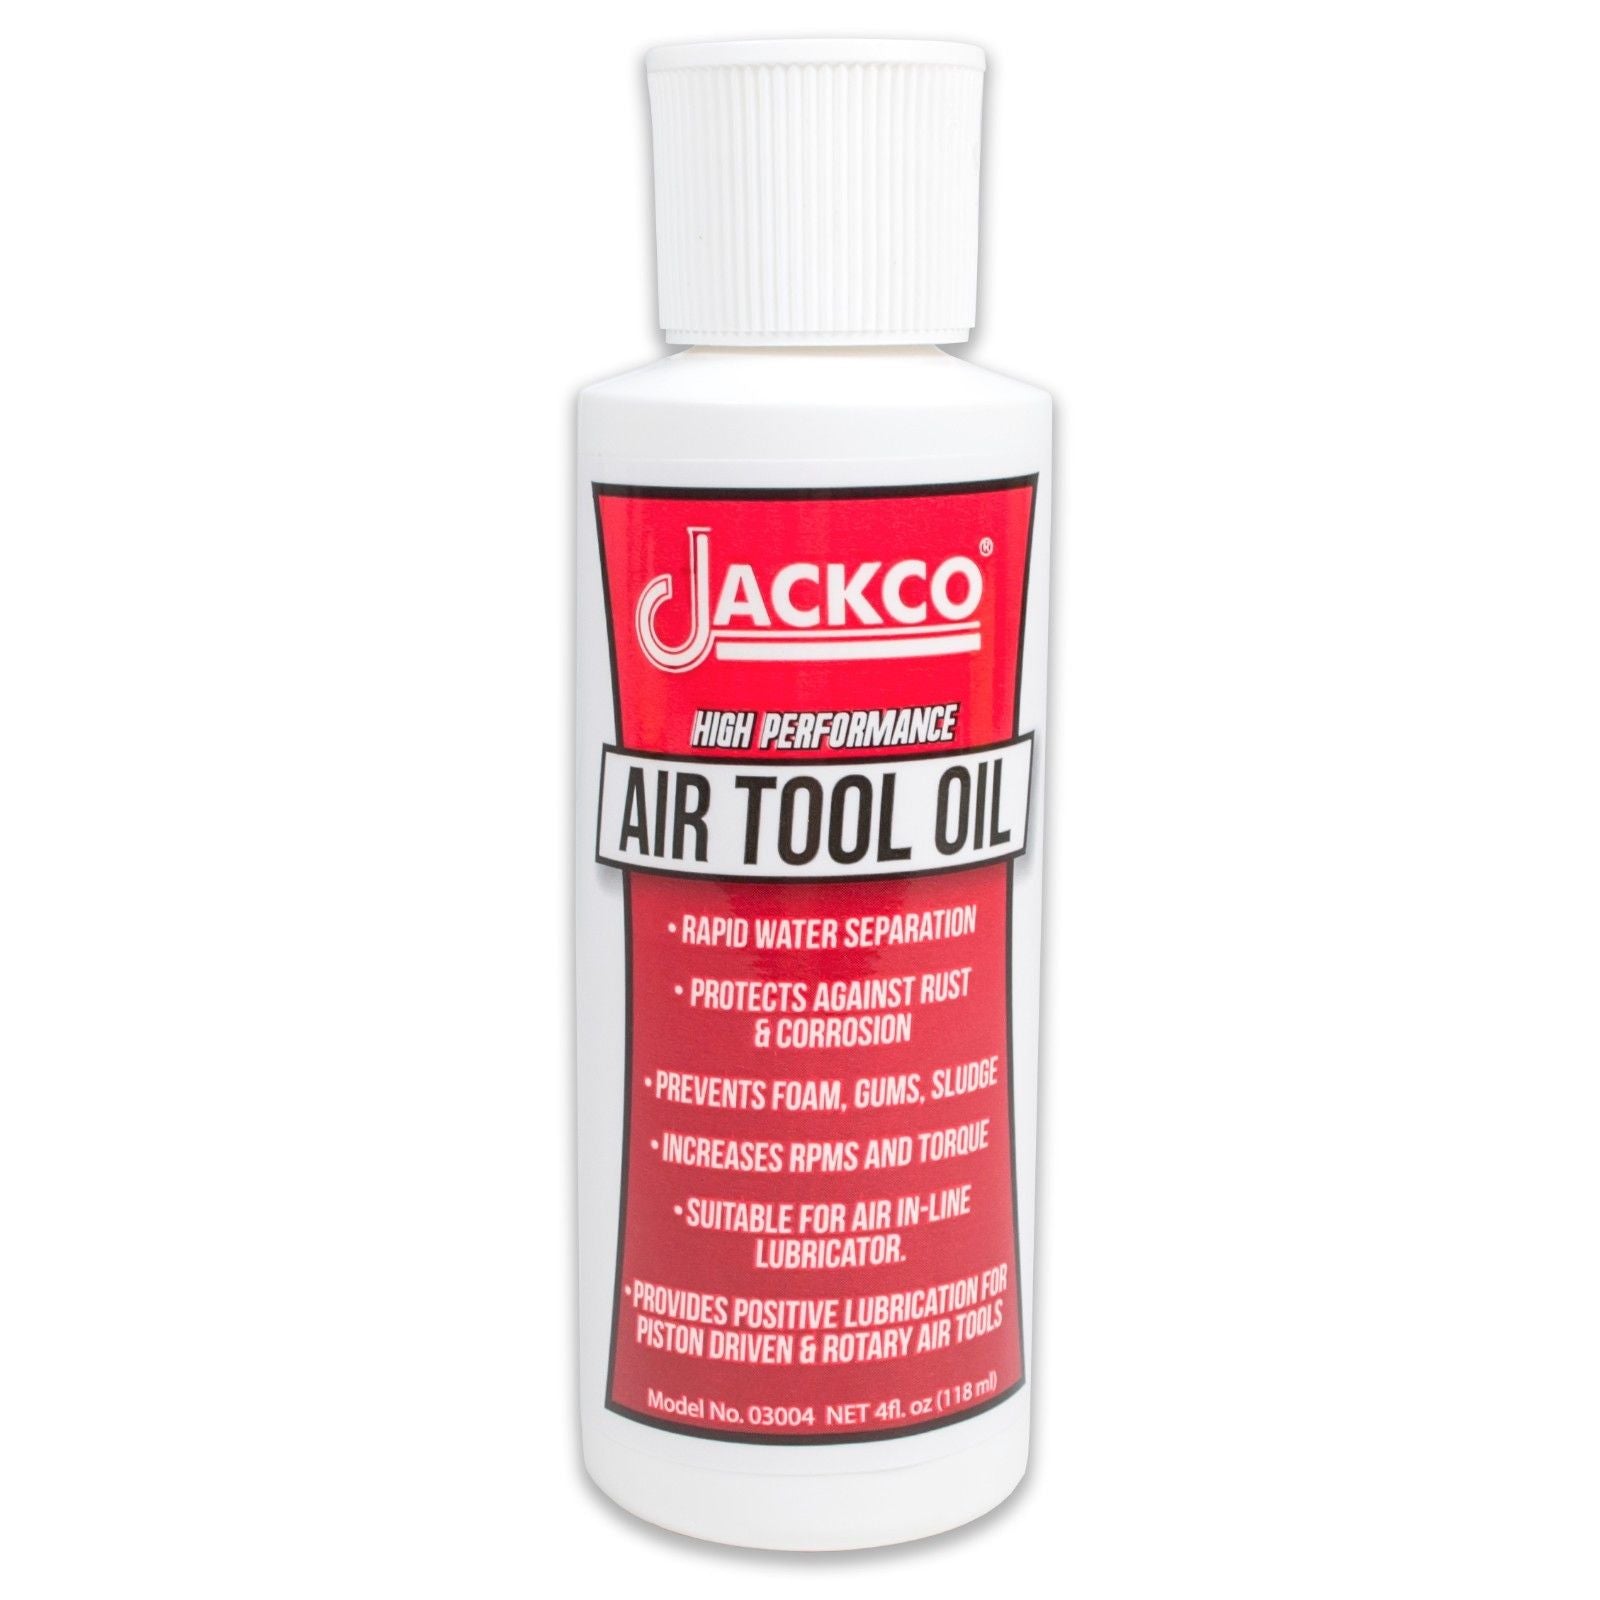 Jackco High Performance Pneumatic Air Tool Oil (4 oz.)